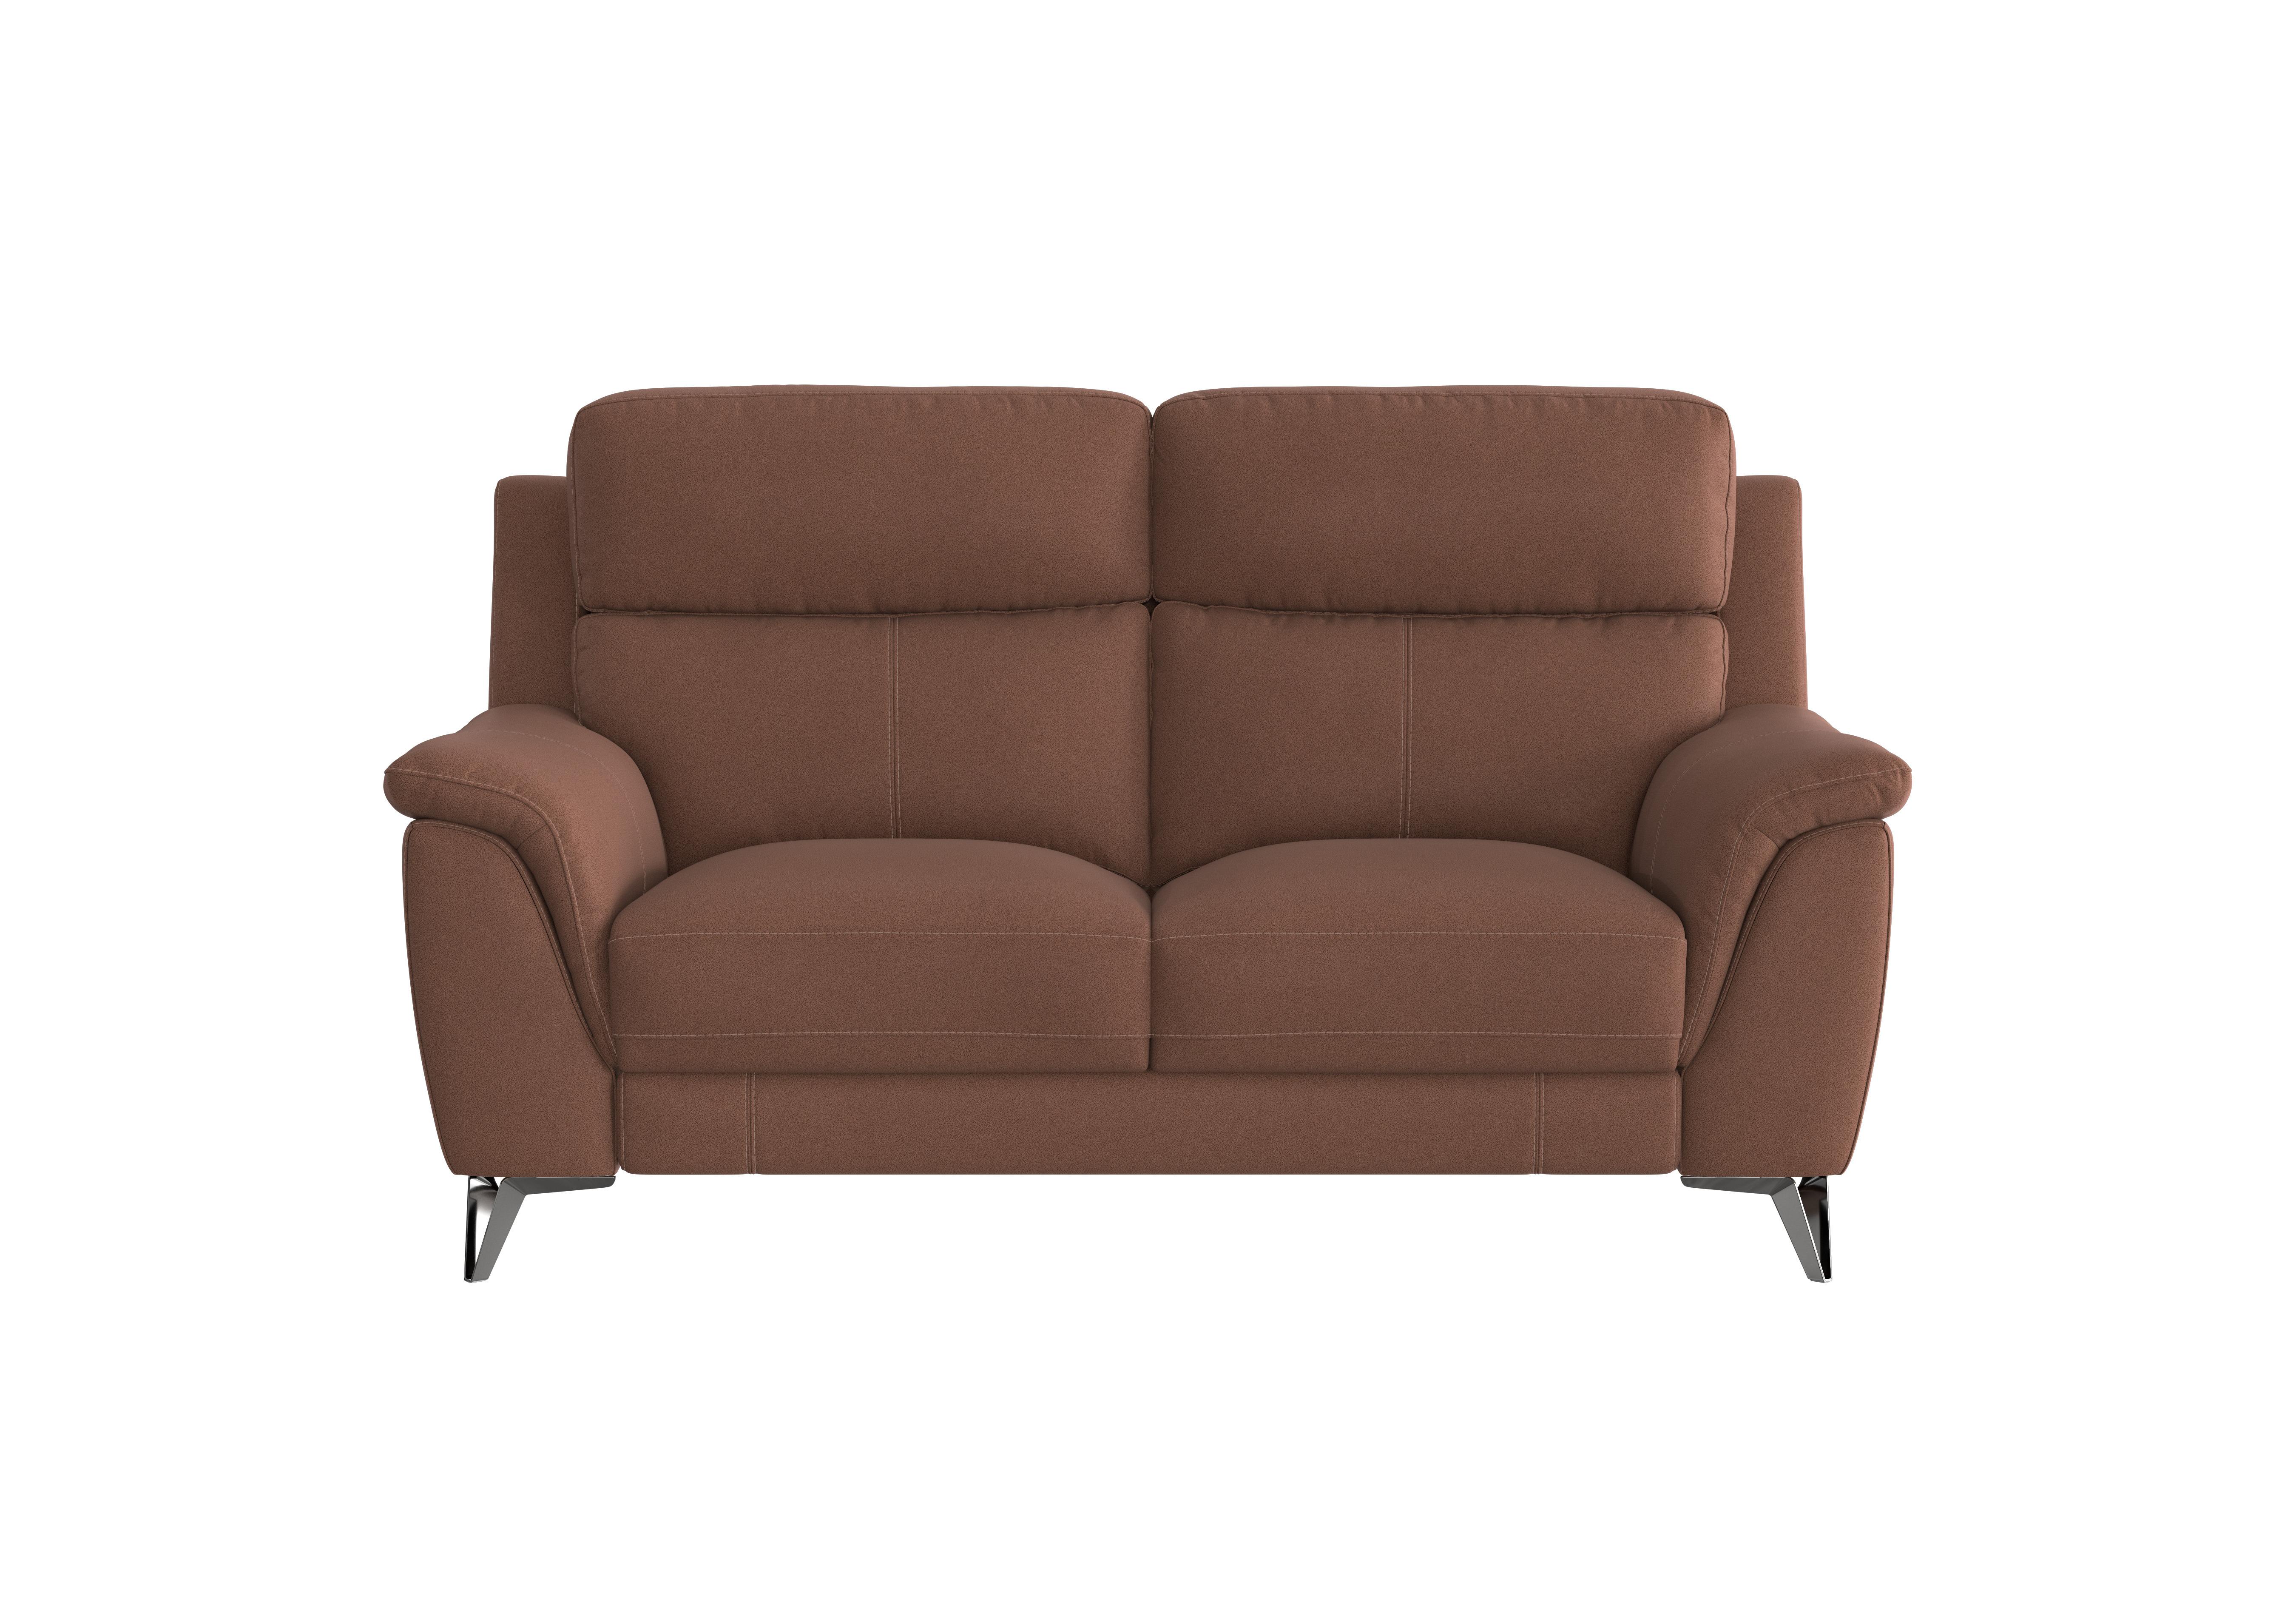 Contempo 2 Seater Fabric Sofa in Bfa-Blj-R05 Hazelnut on Furniture Village